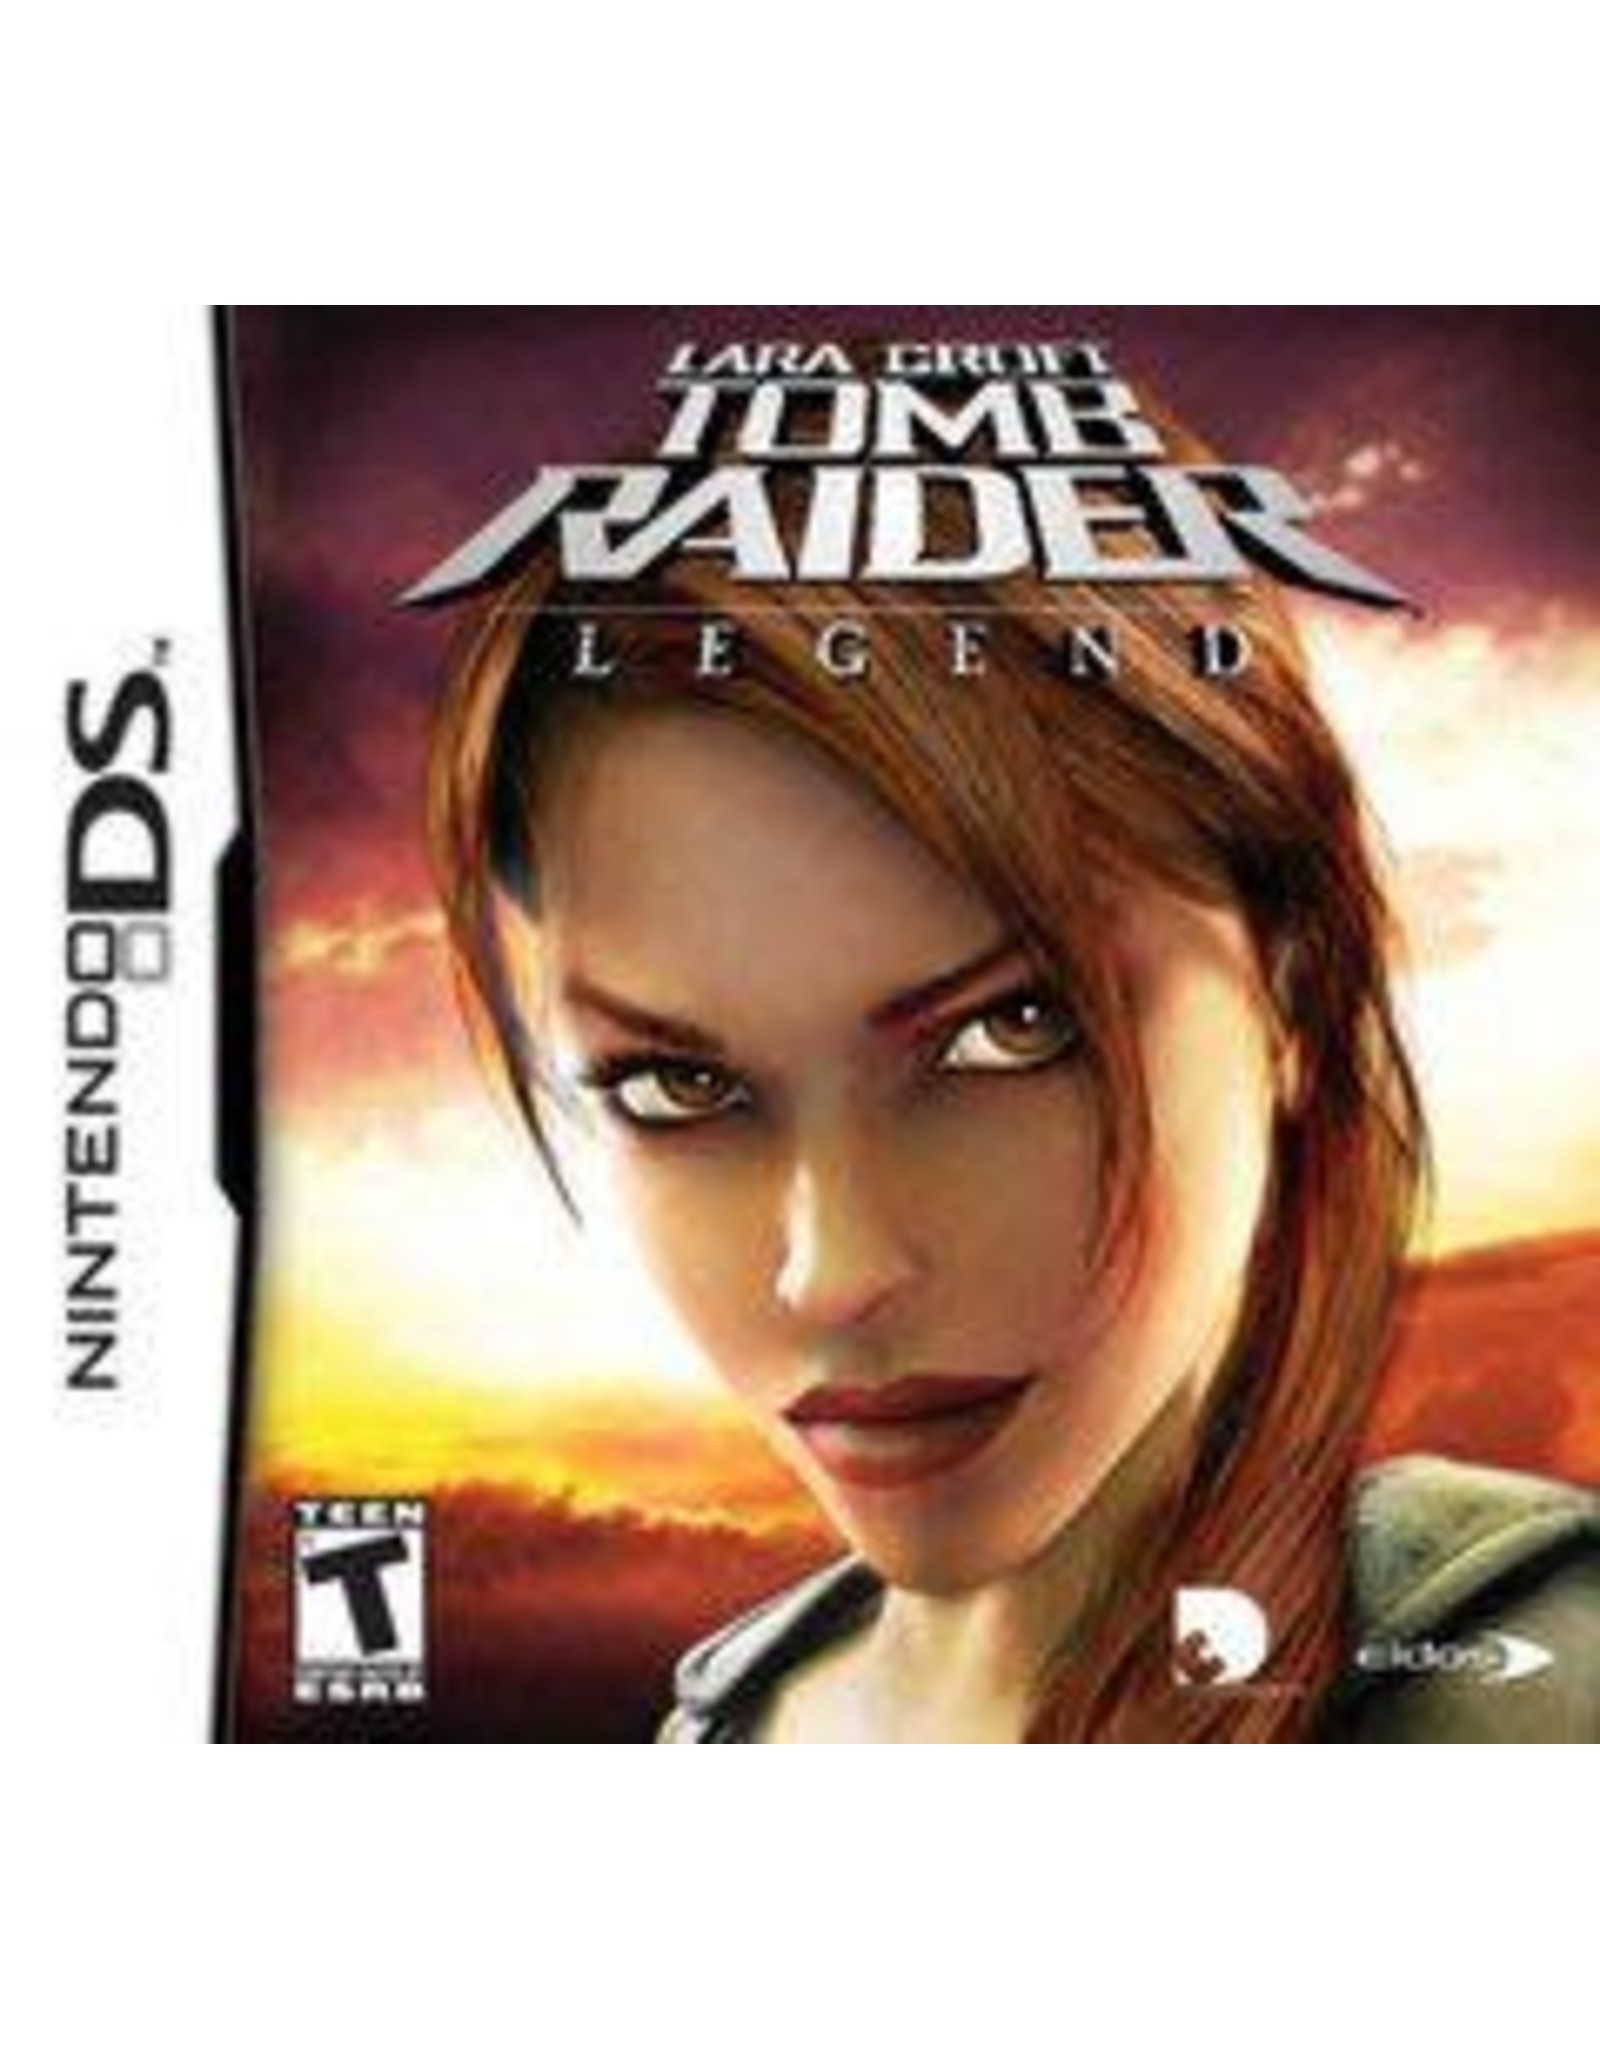 Nintendo DS Tomb Raider Legend (CiB)